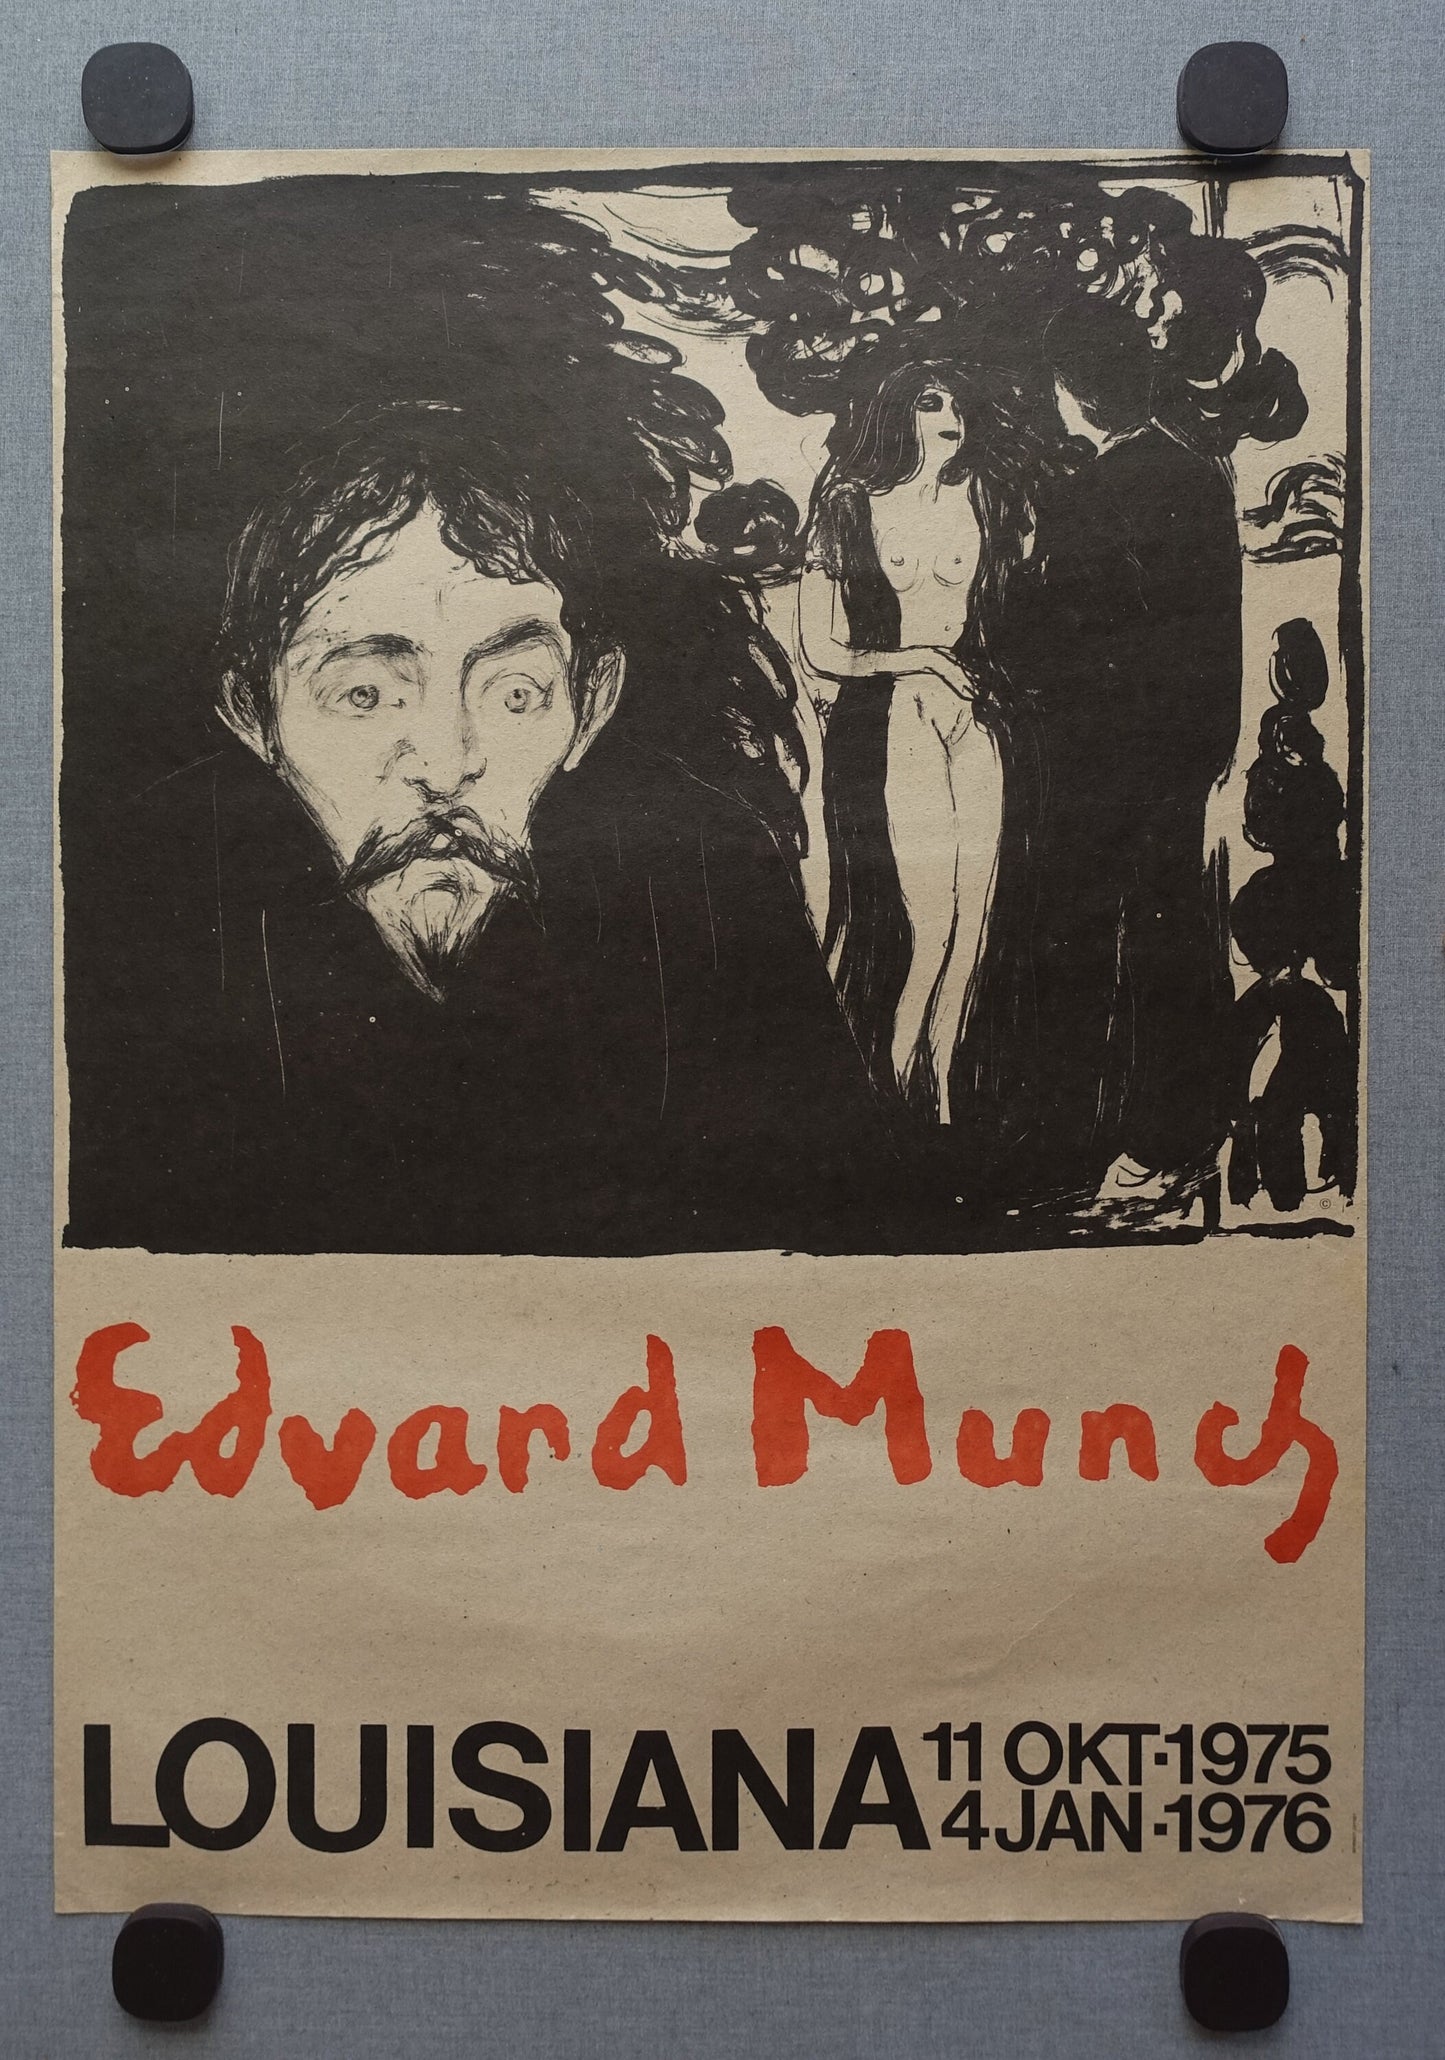 1975 Edvard Munch Louisiana Modern Art - Original Vintage Poster